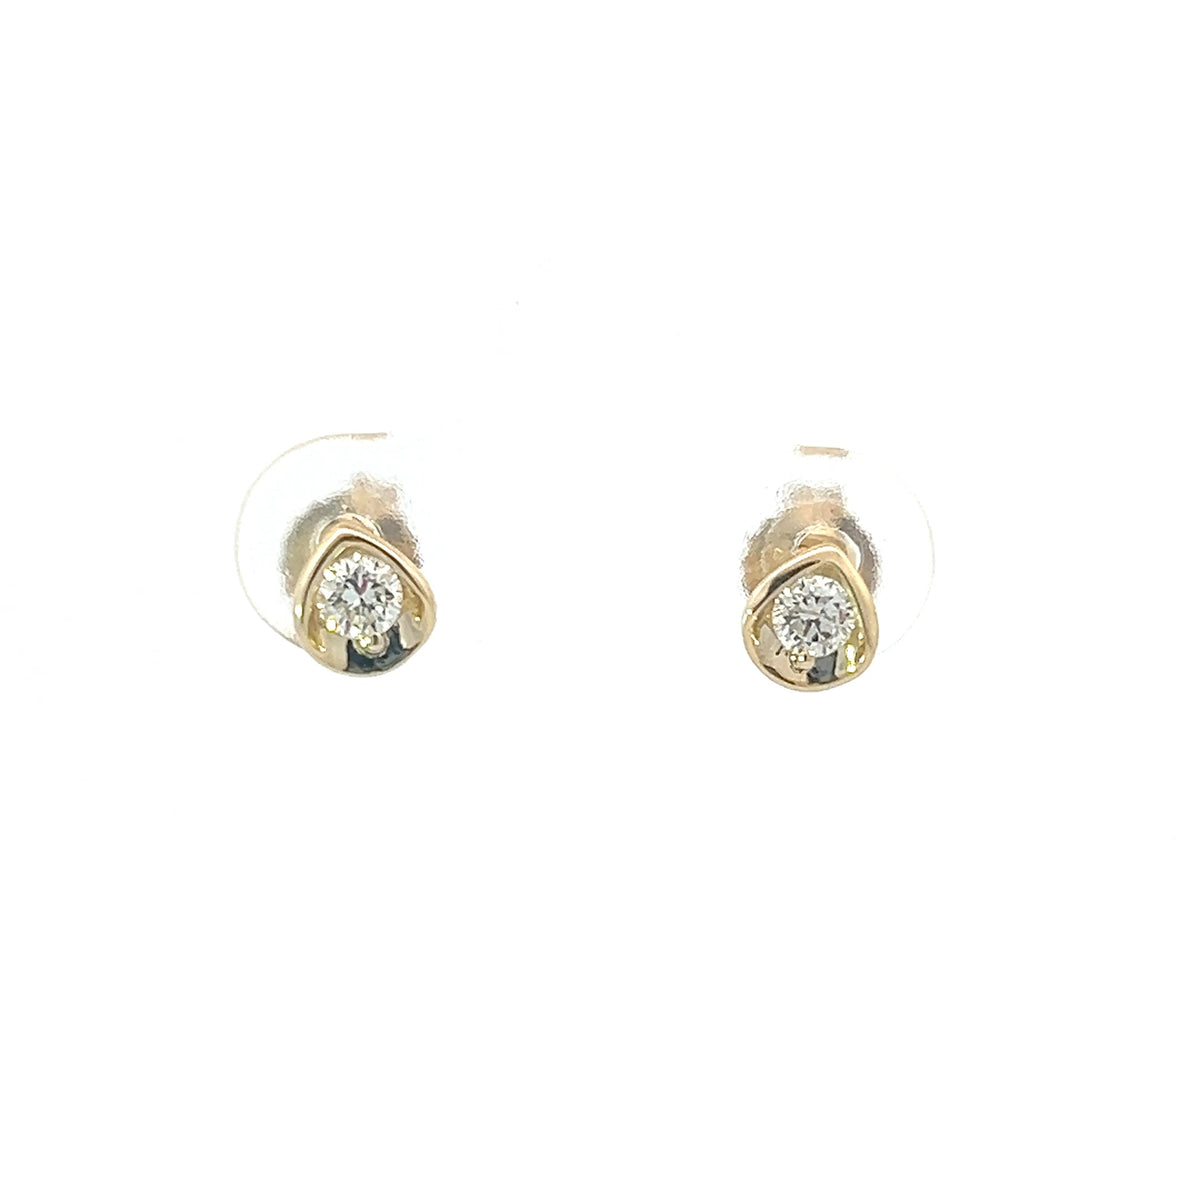 10K Yellow Gold 0.15 cttw Round Brilliant Cut Canadian Diamond Earrings